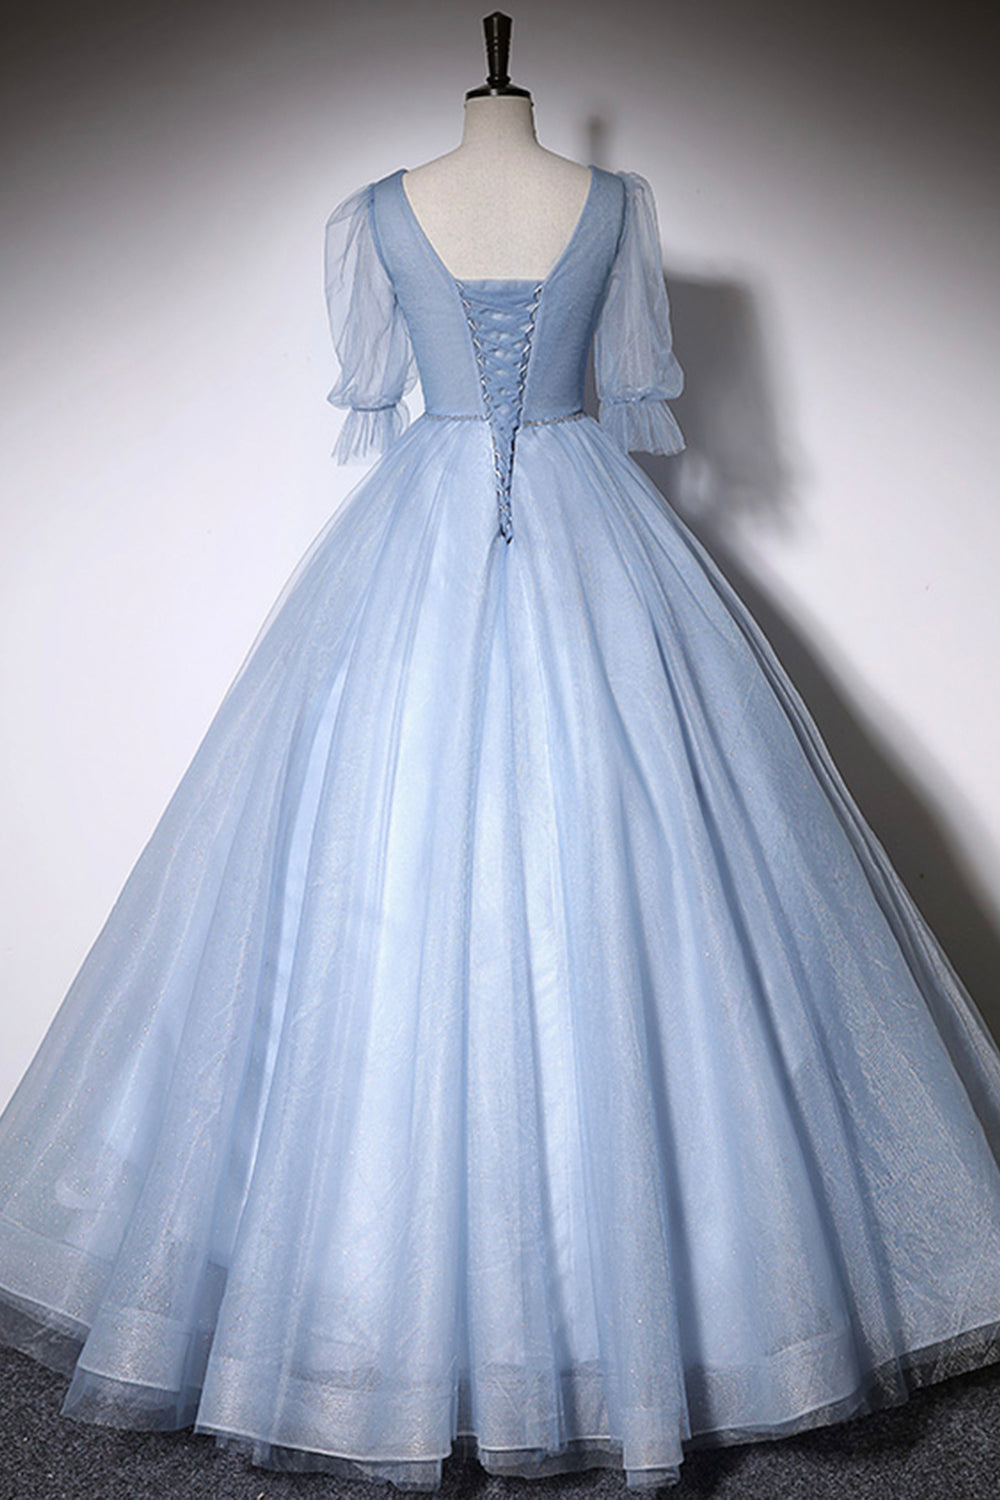 Satin Bridesmaid Dress, Blue V-Neck Tulle Long Prom Dress, A-Line Formal Evening Dress